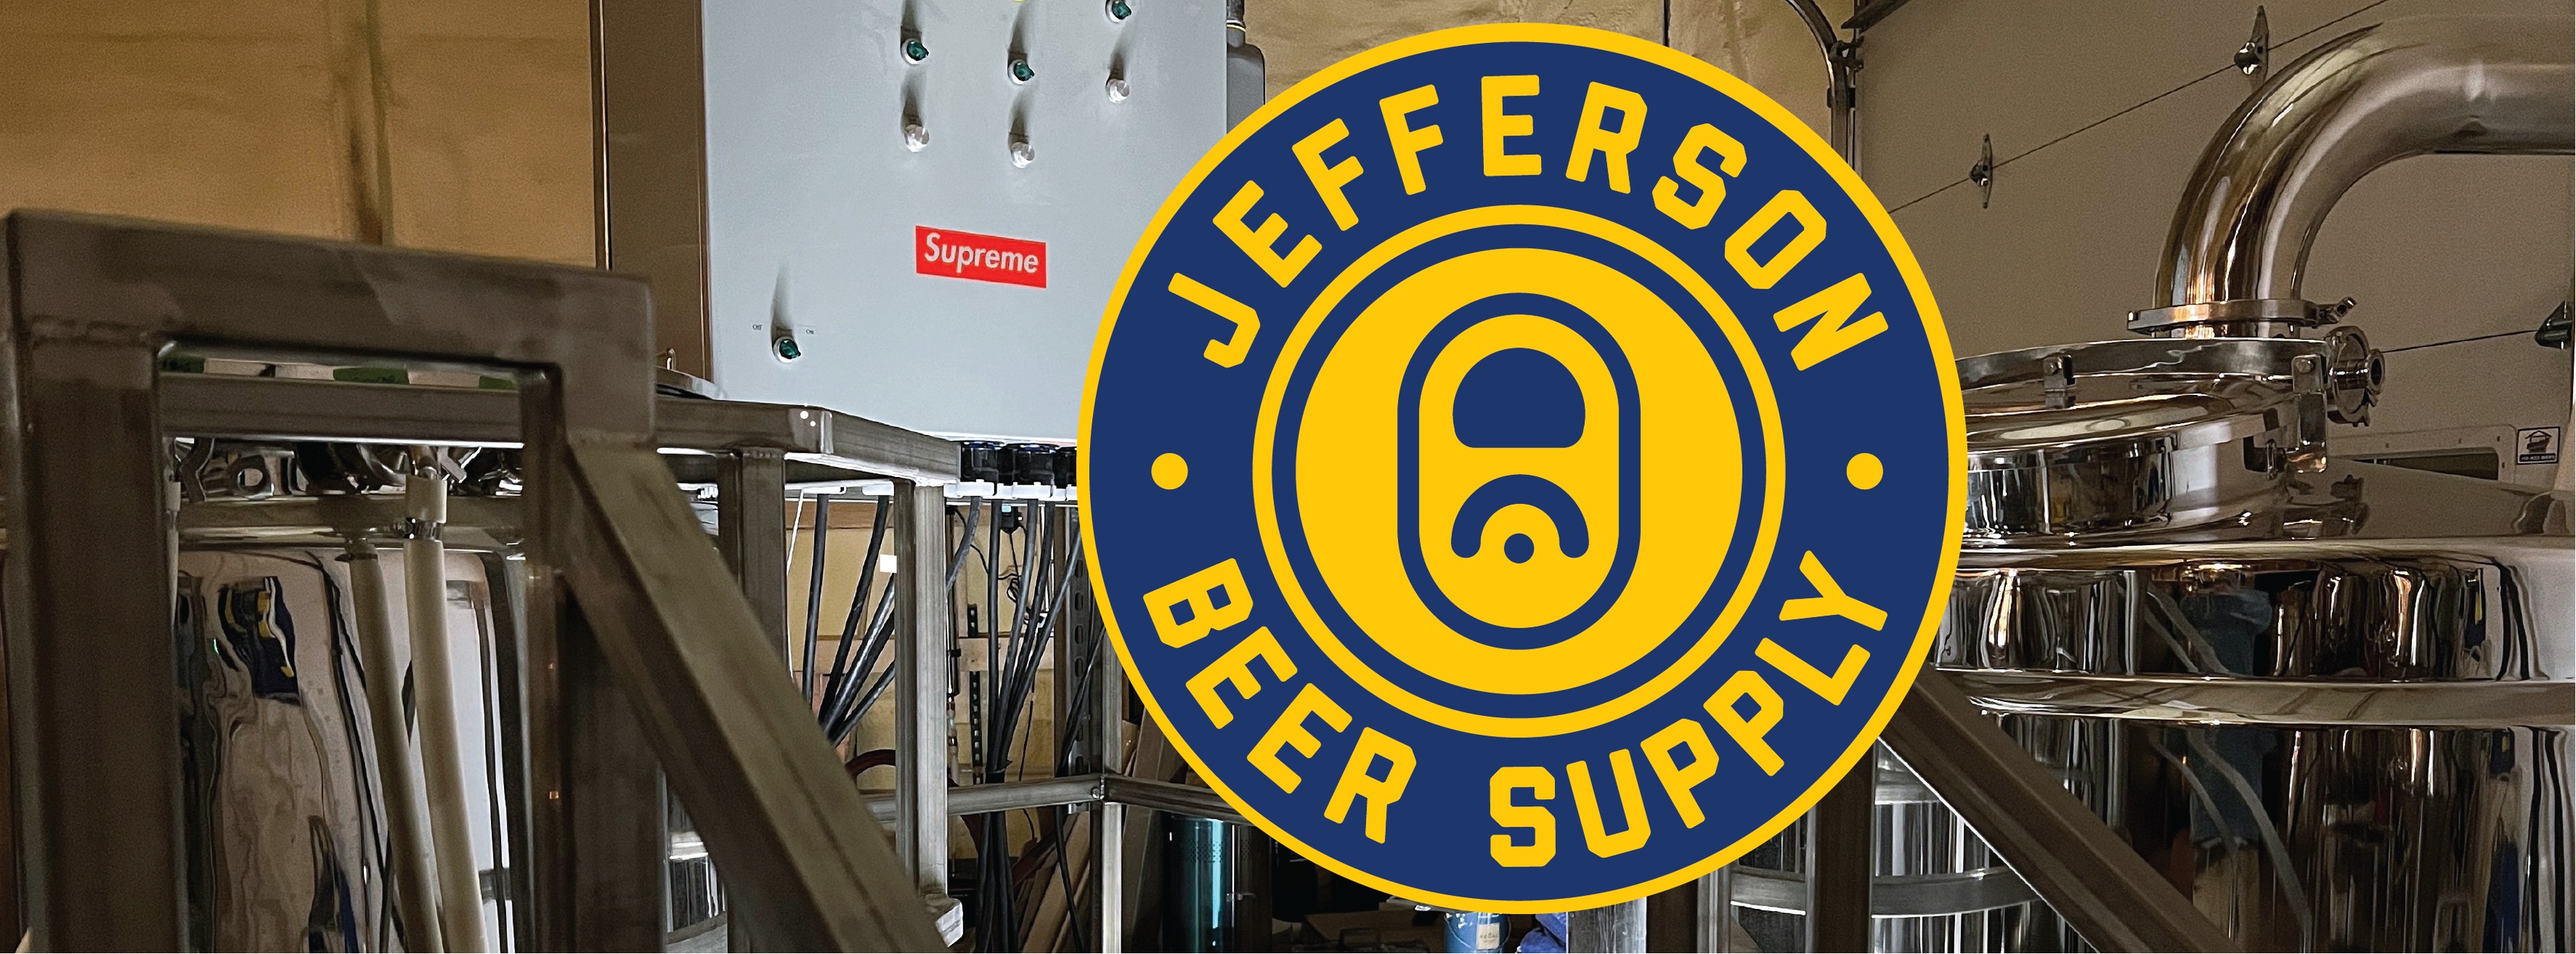 Jefferson Beer Supply